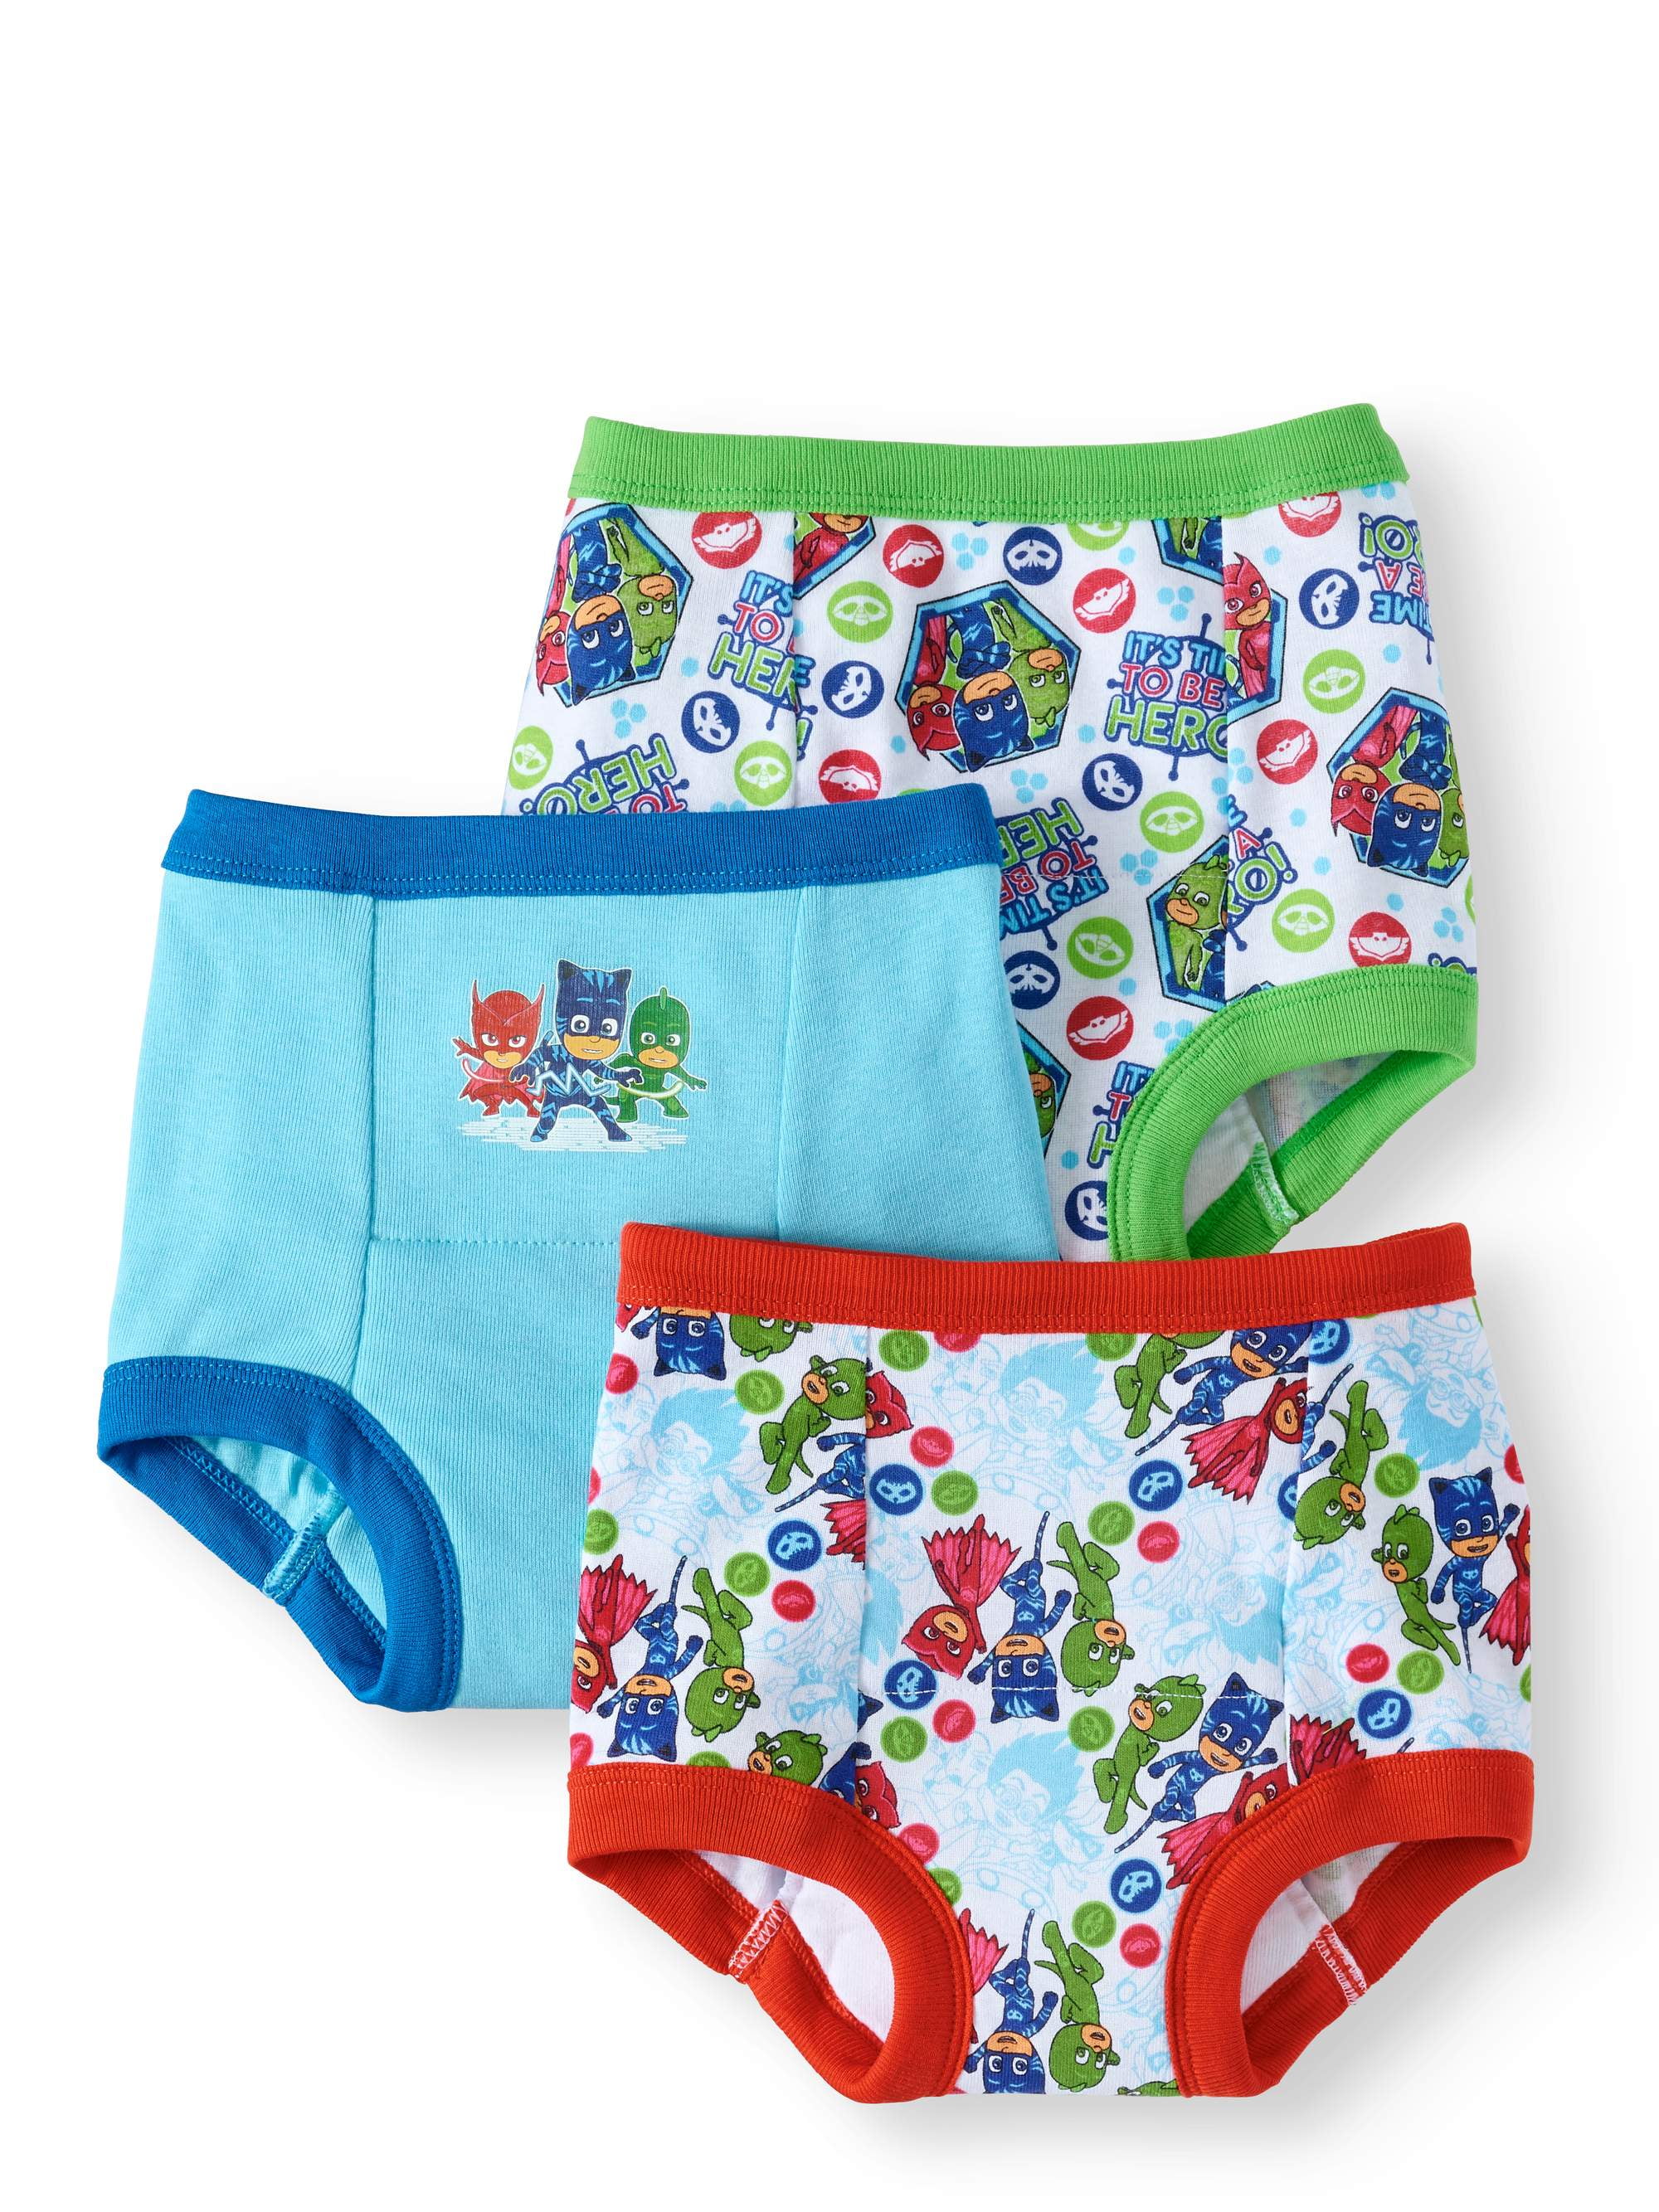 PJ Masks Potty Training Pants Underwear, 3-Pack (Toddler Boys) 